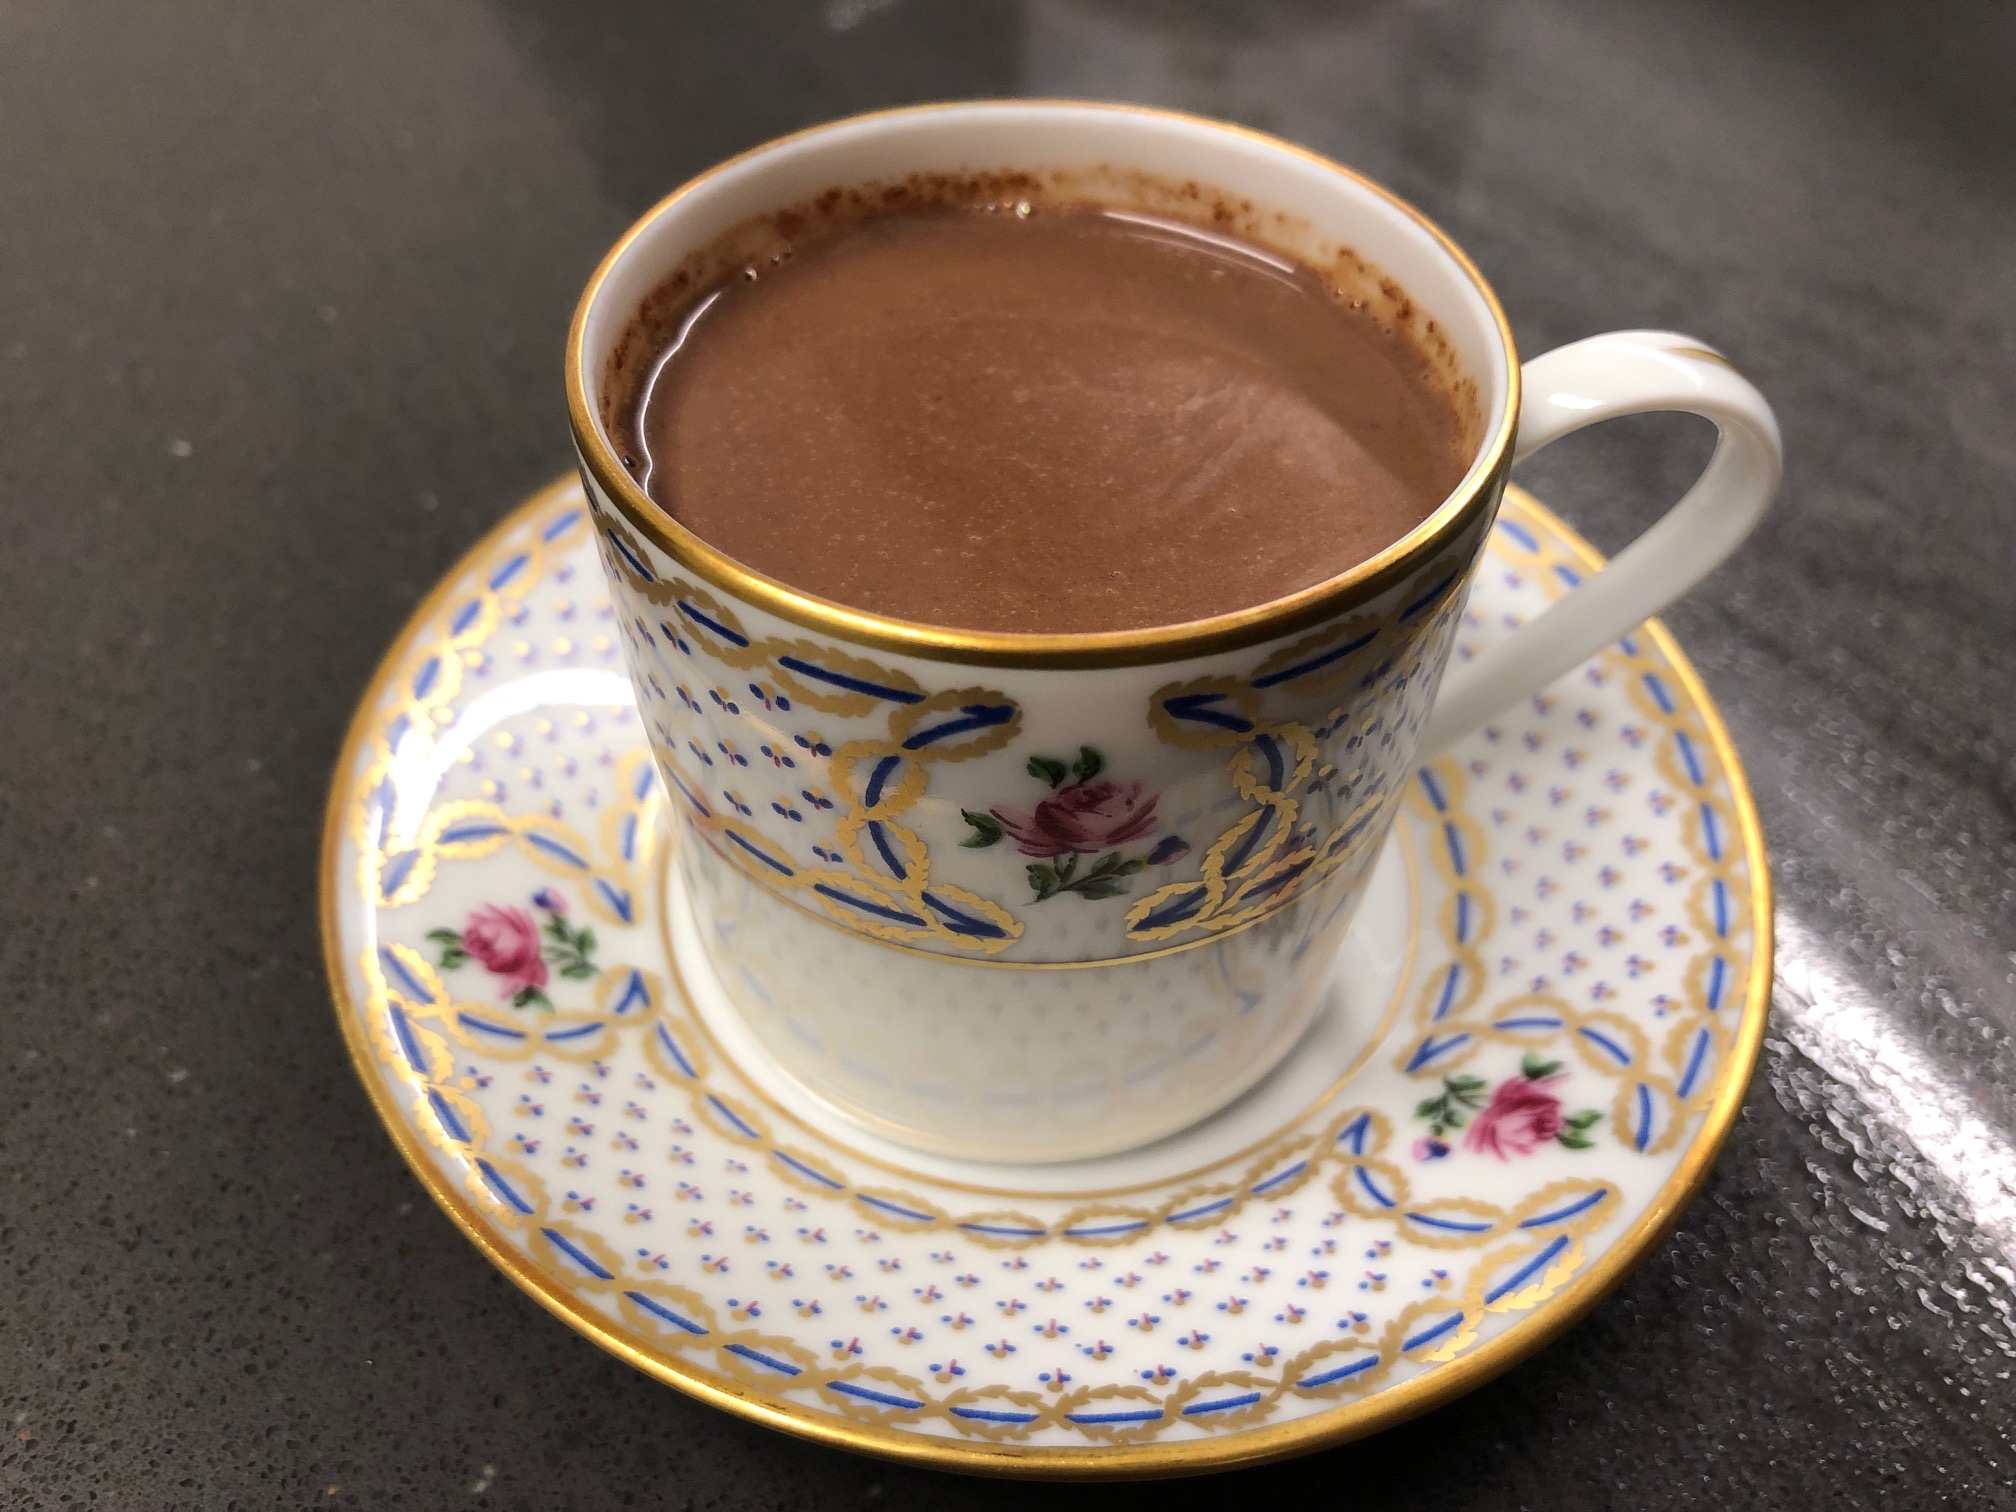 Chocolatier’s Rich Hot Chocolate